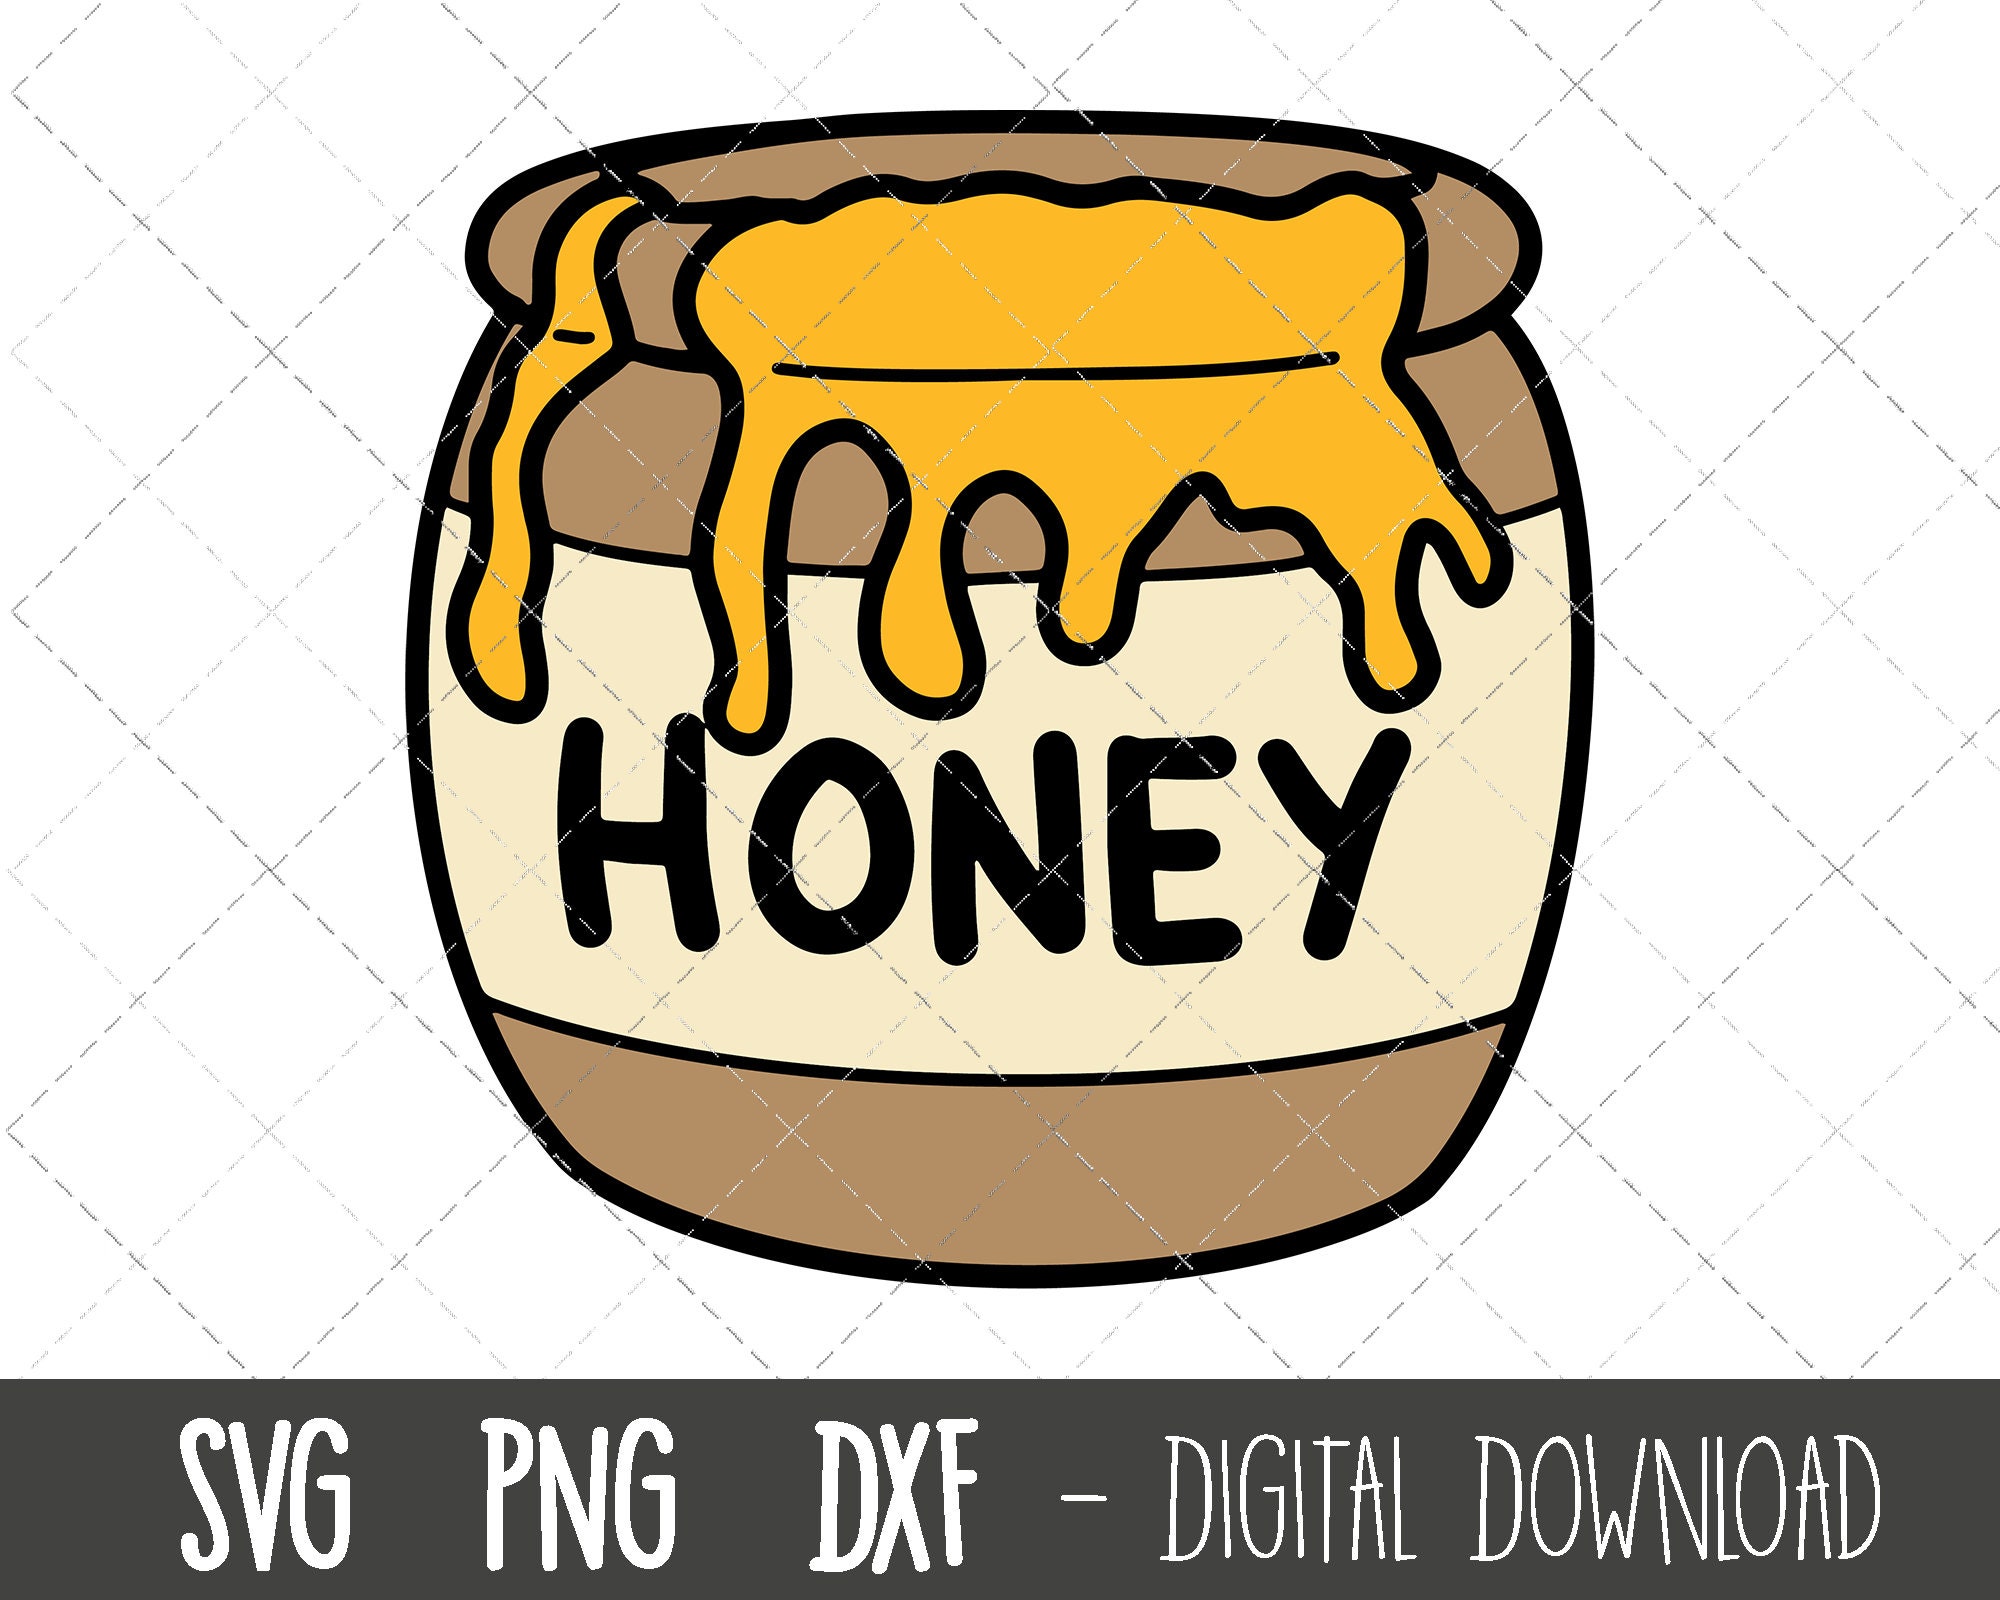 The Honey Post